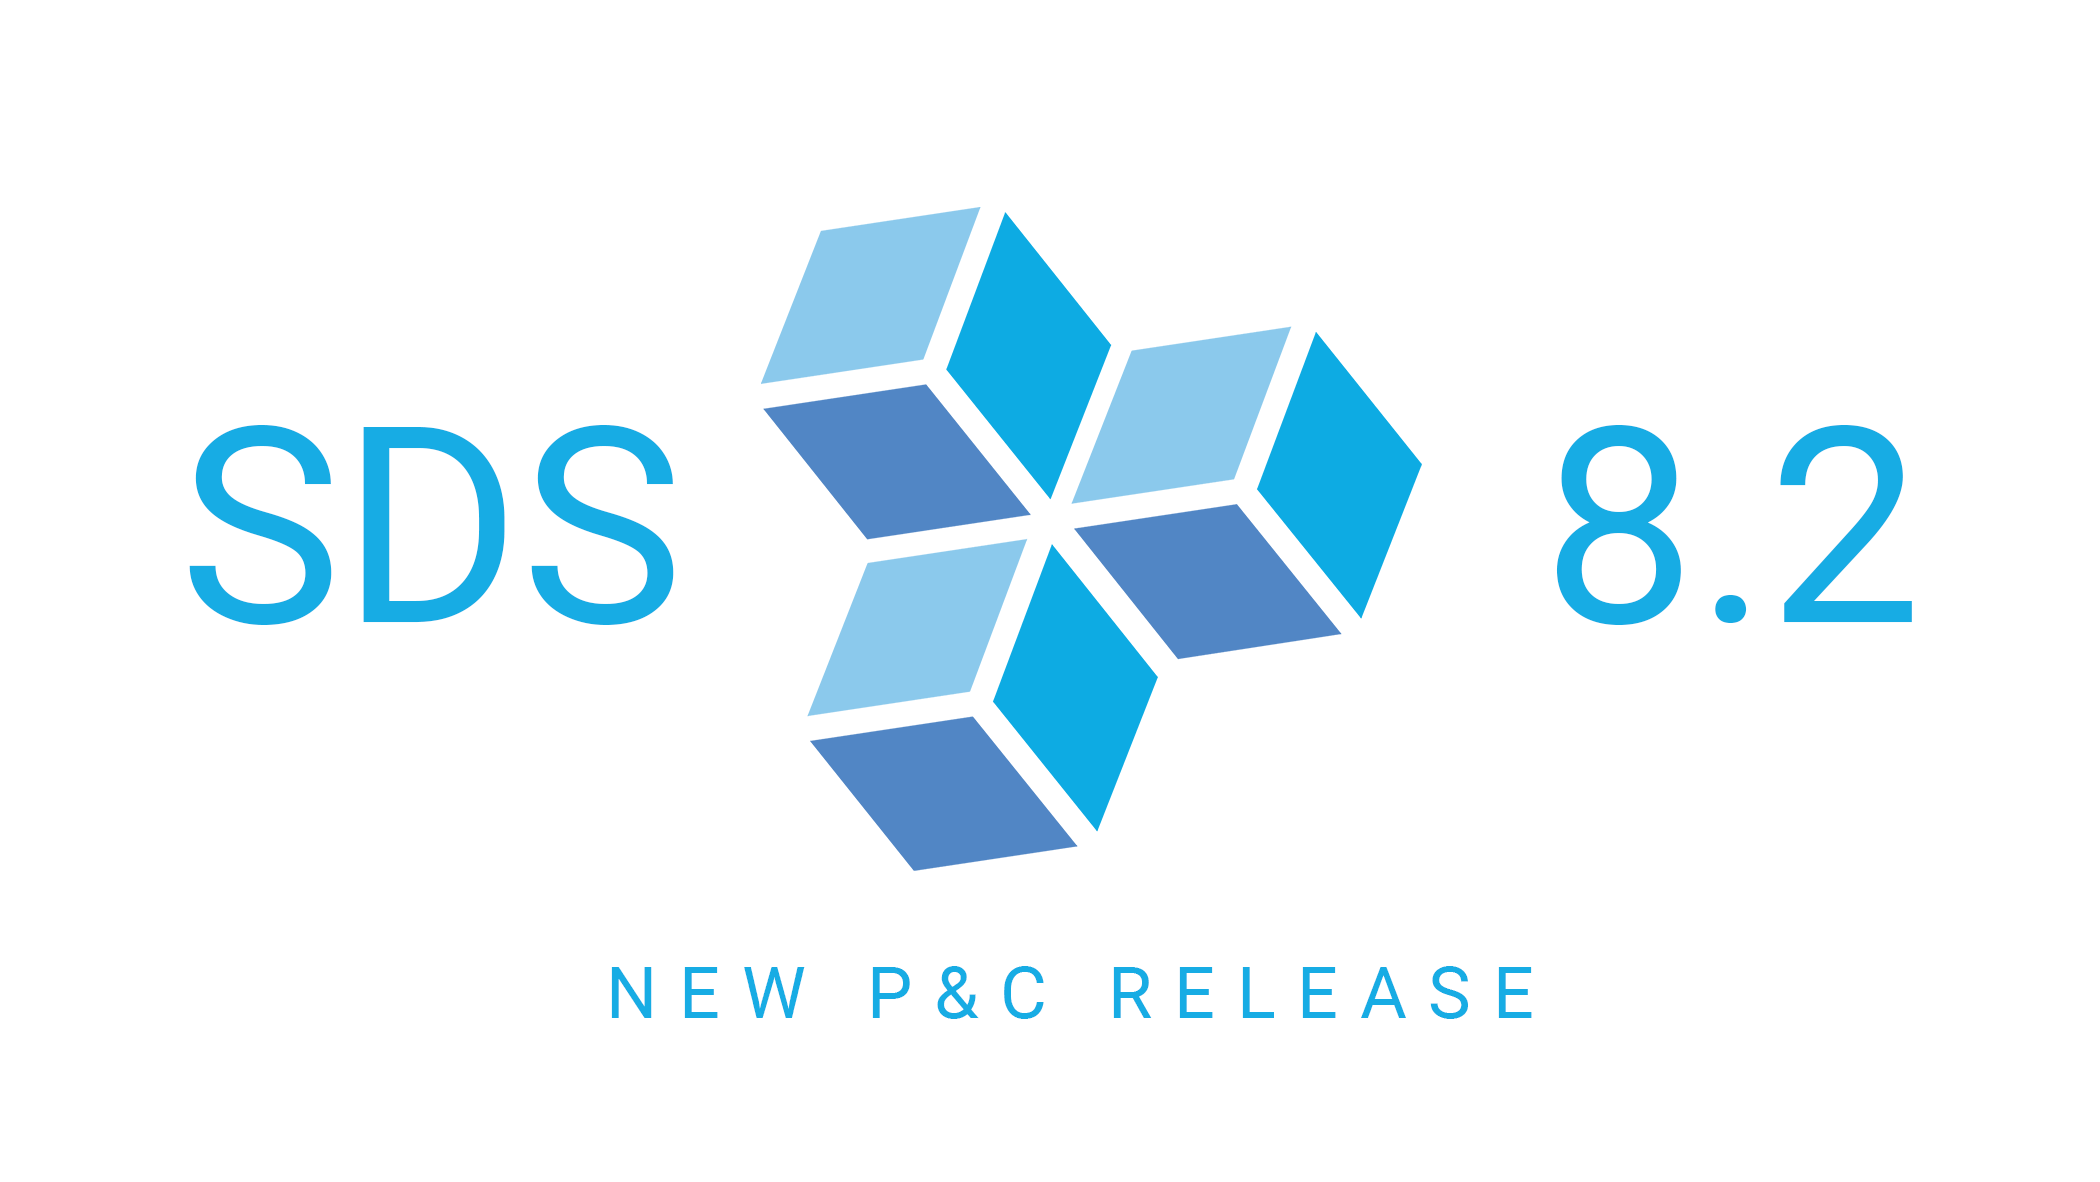 Release of Substation Design Suite P&C 8.2